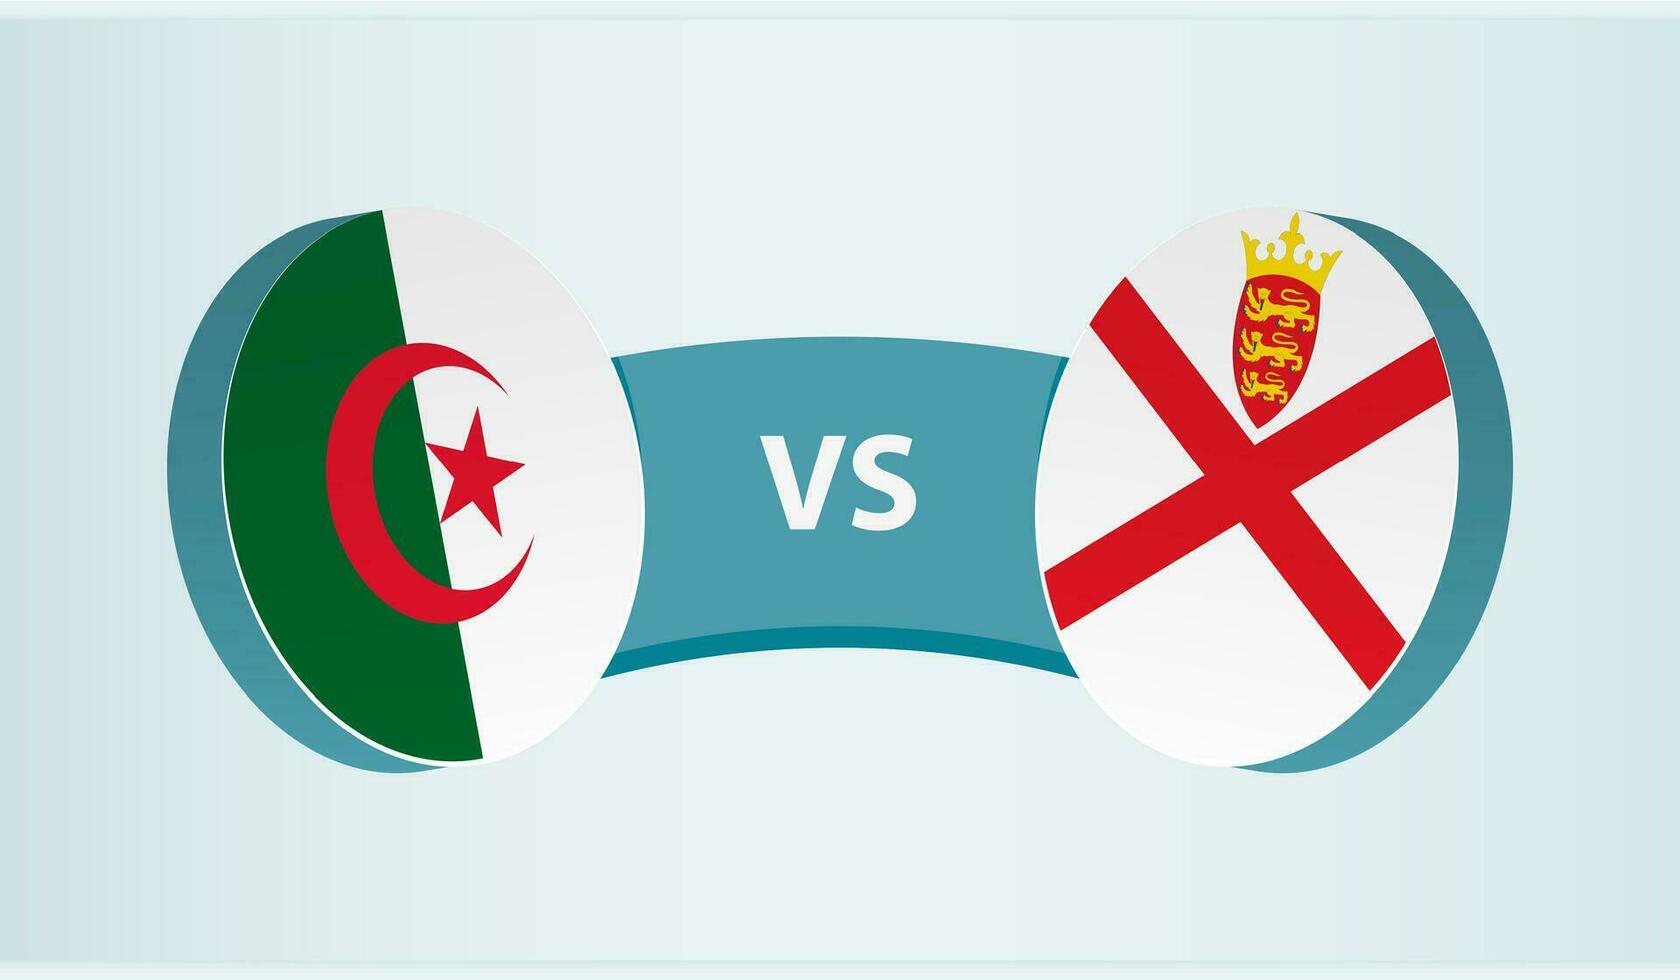 Argélia versus camisa, equipe Esportes concorrência conceito. vetor